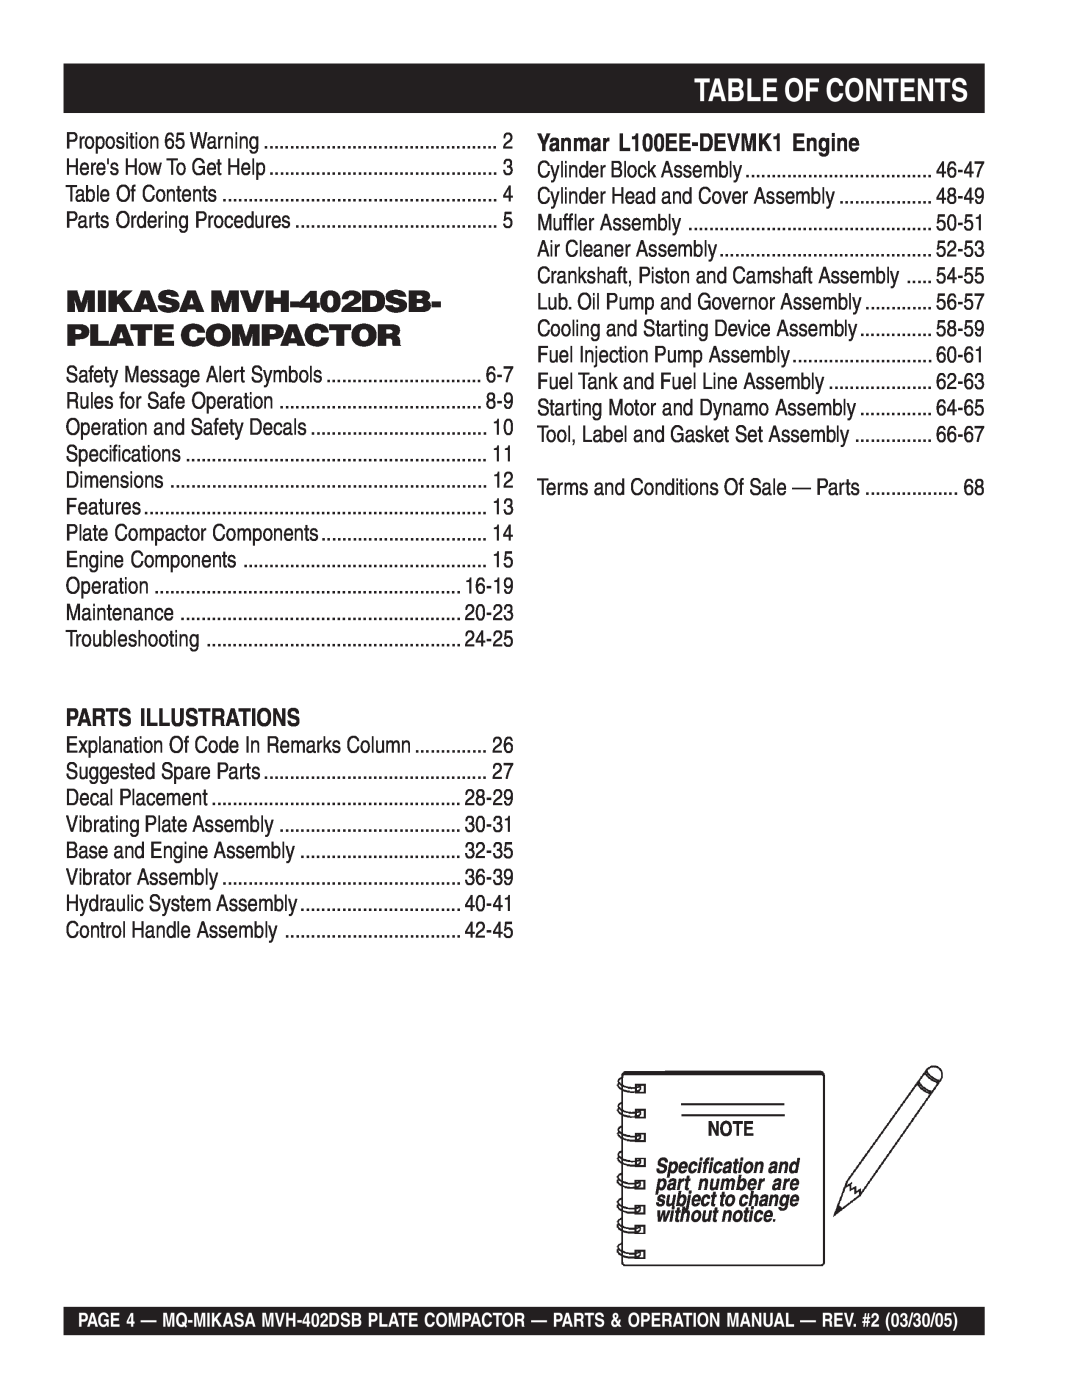 Multiquip Table Of Contents, MIKASA MVH-402DSB, Plate Compactor, Yanmar L100EE-DEVMK1Engine, Parts Illustrations, 28-29 